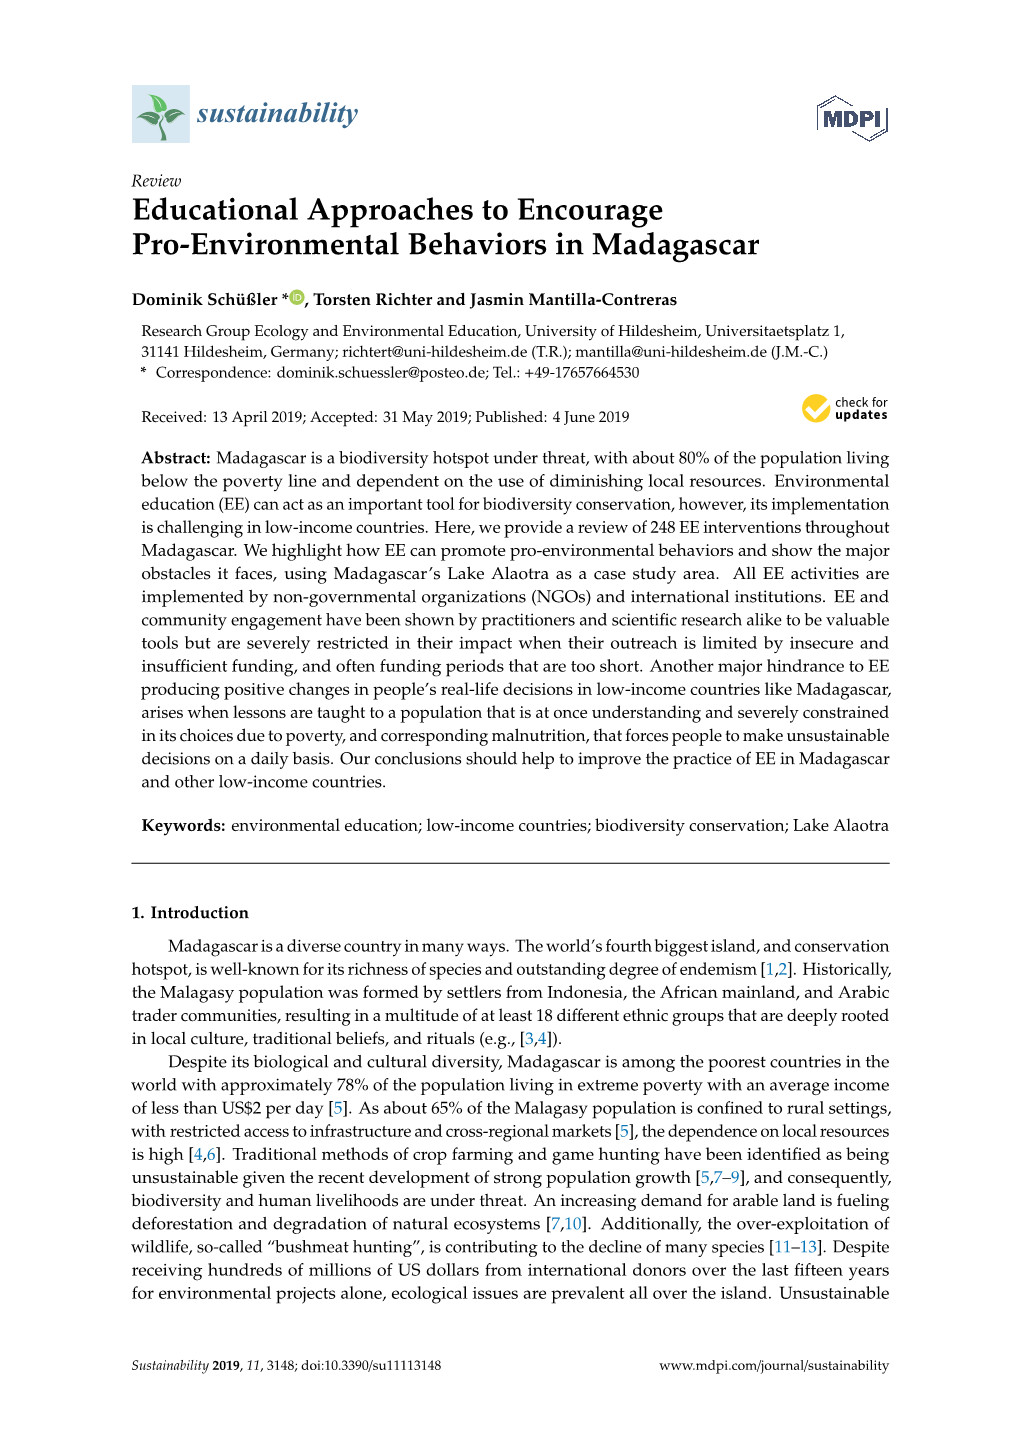 Educational Approaches to Encourage Pro-Environmental Behaviors in Madagascar